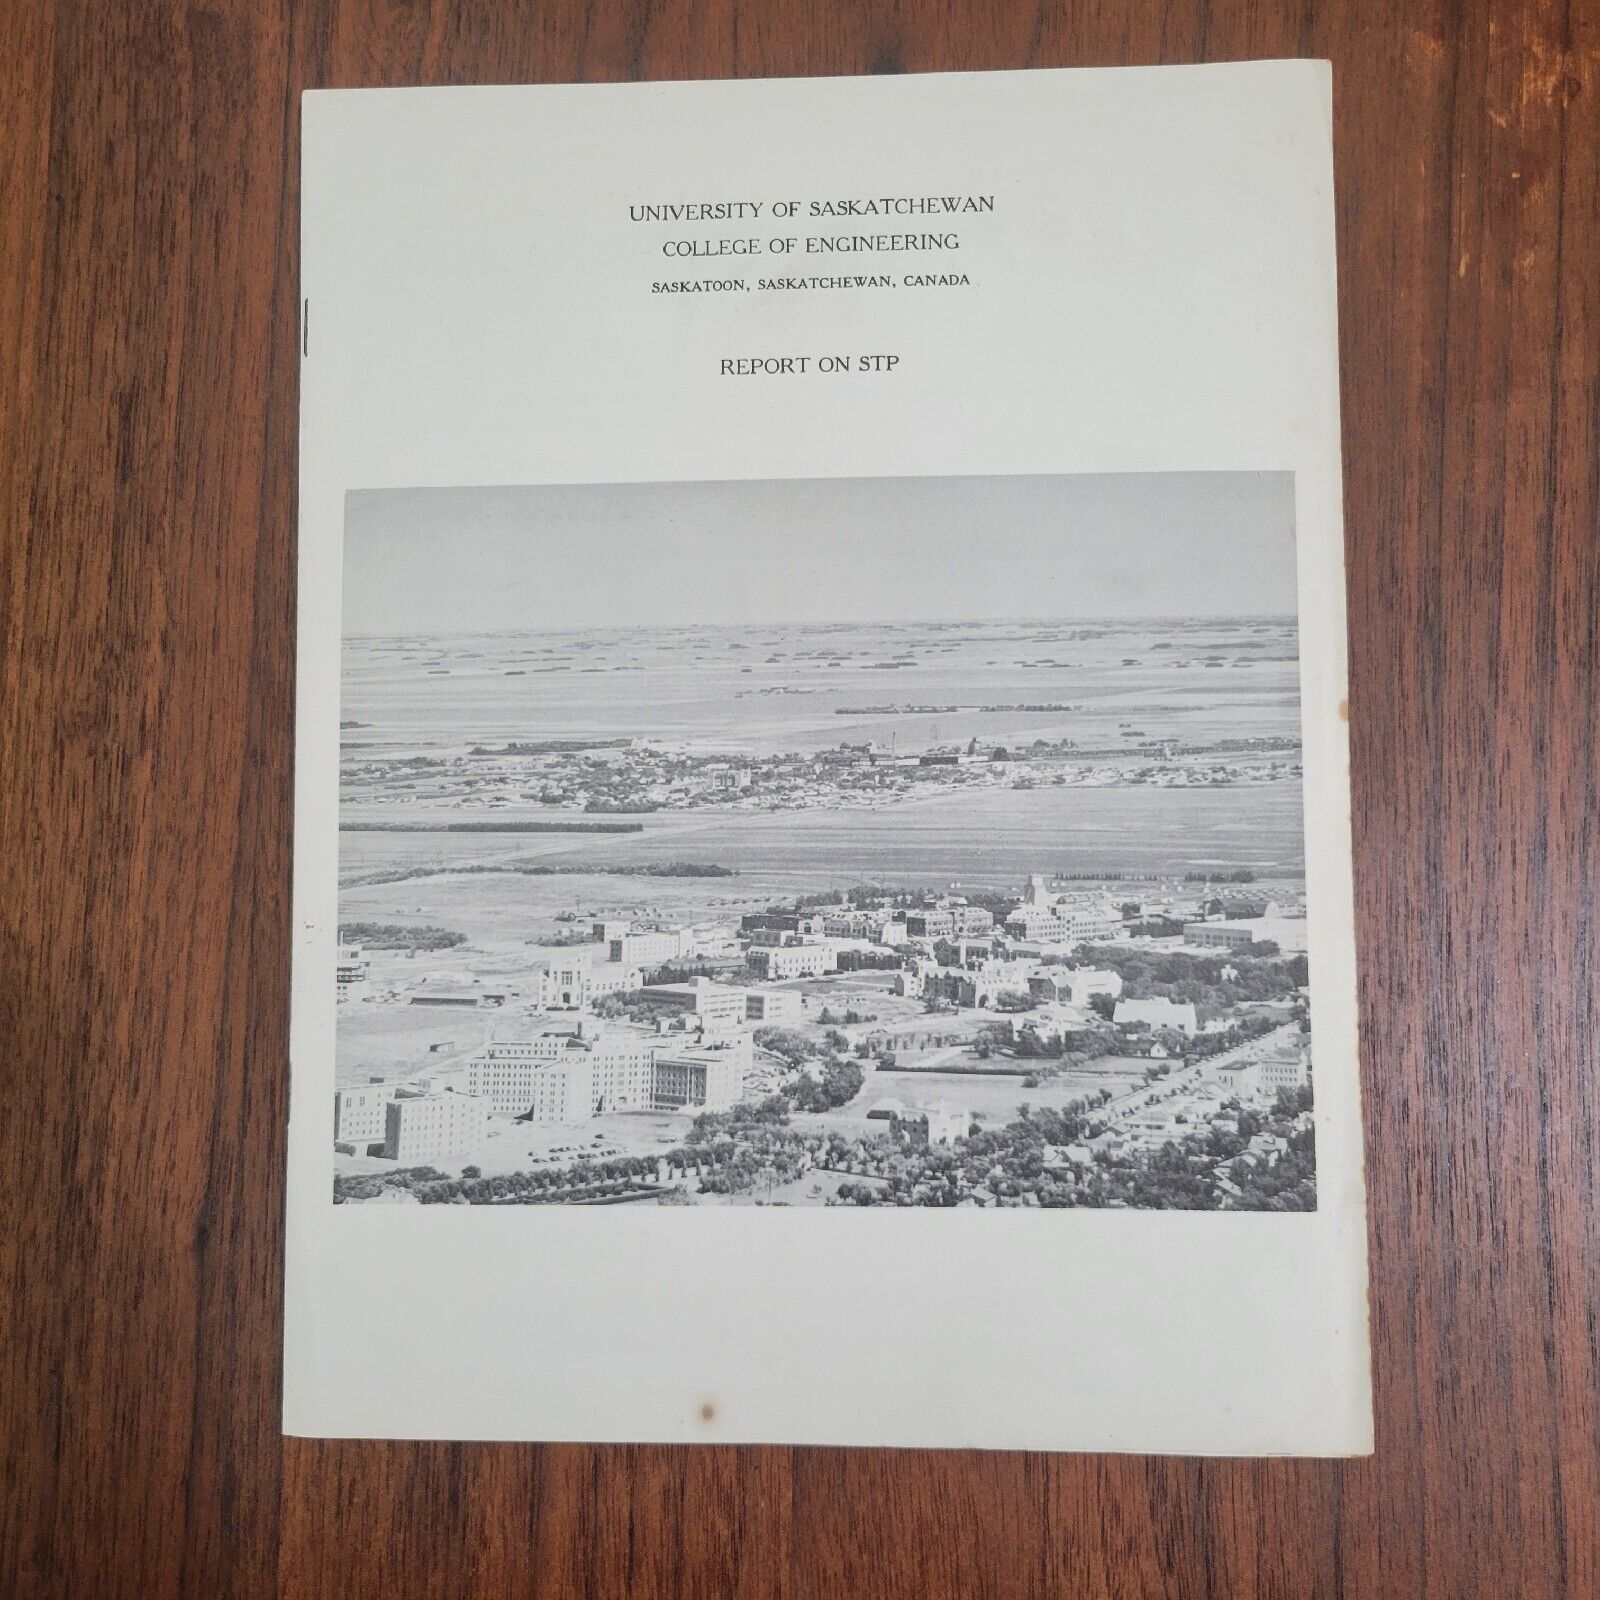 Vintage 1960 Report on STP Oil University of Saskatchewan 6 pages